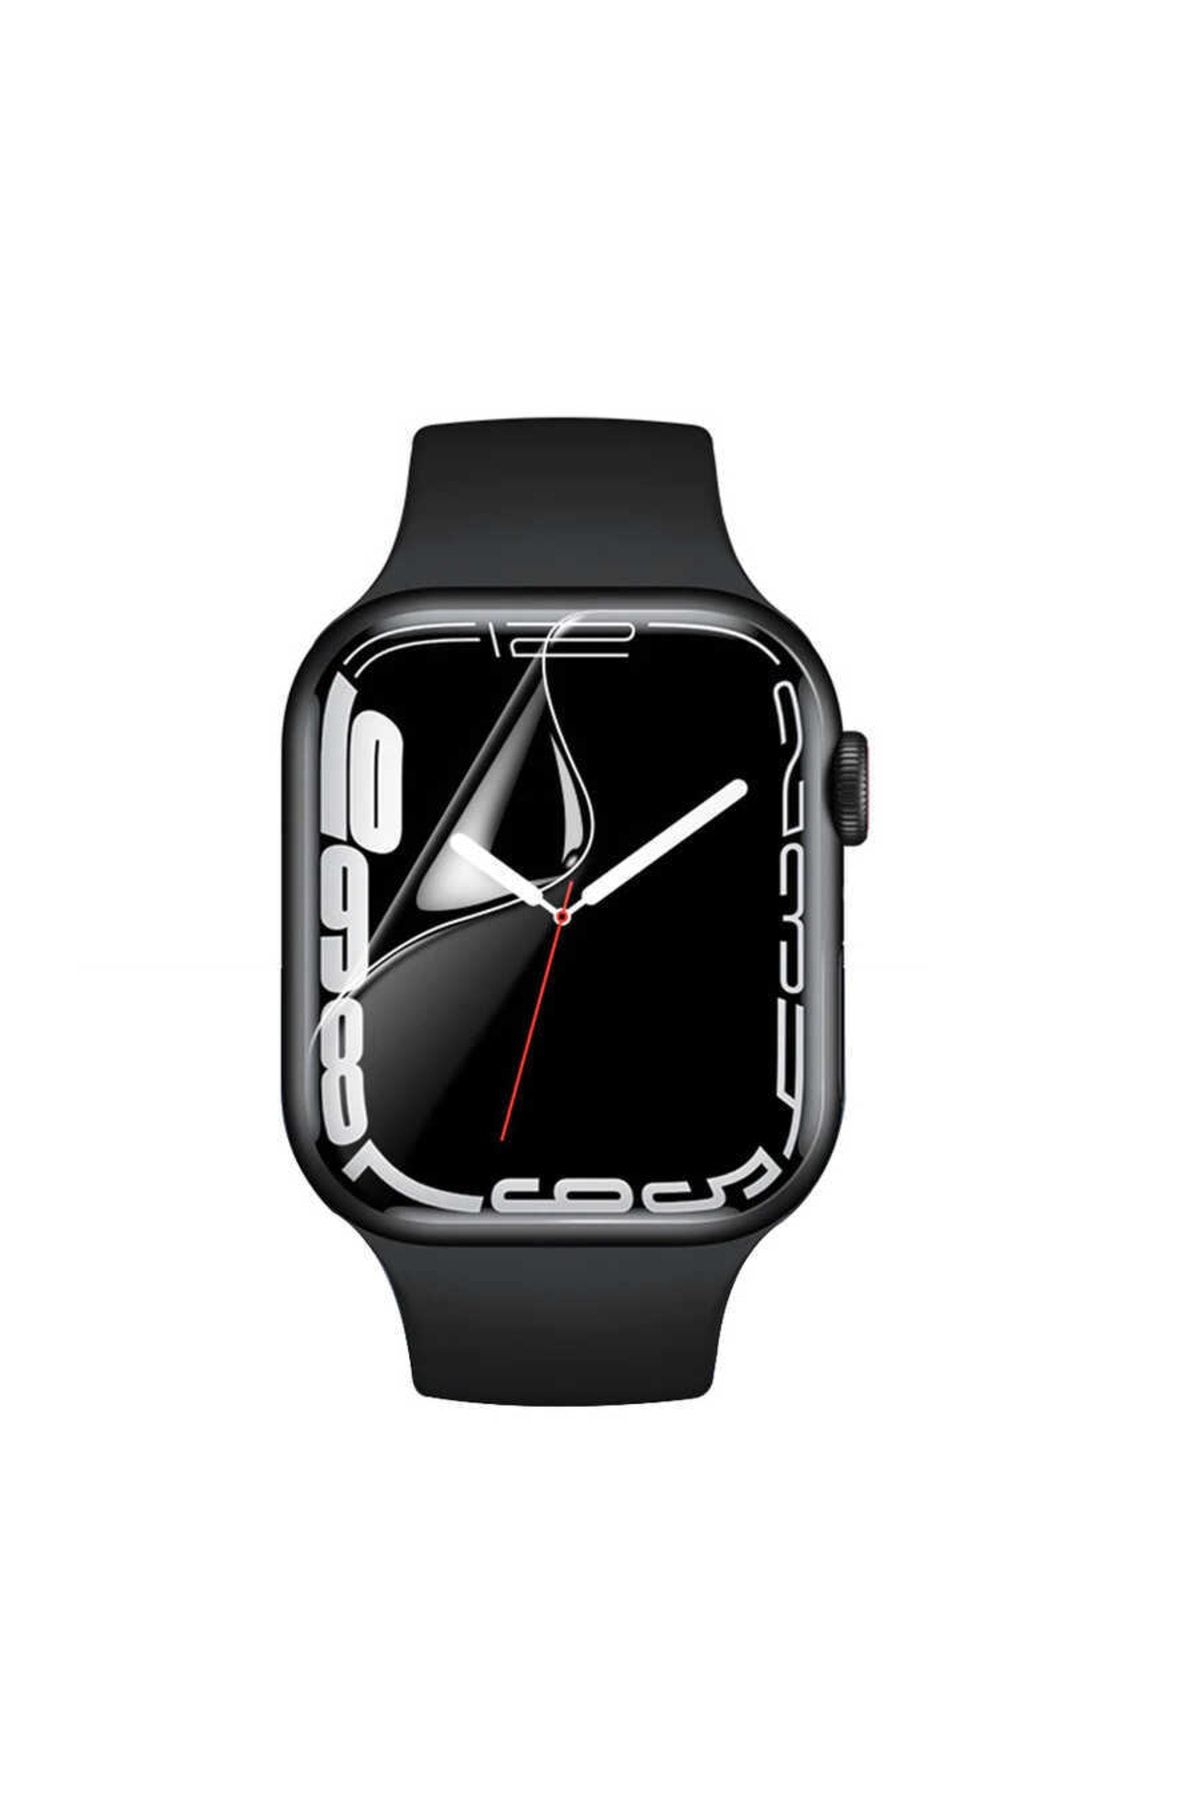 UnDePlus Apple Watch 7 8 9 45mm Full Ekran Nano Saat Koruyucu Narr Tpu